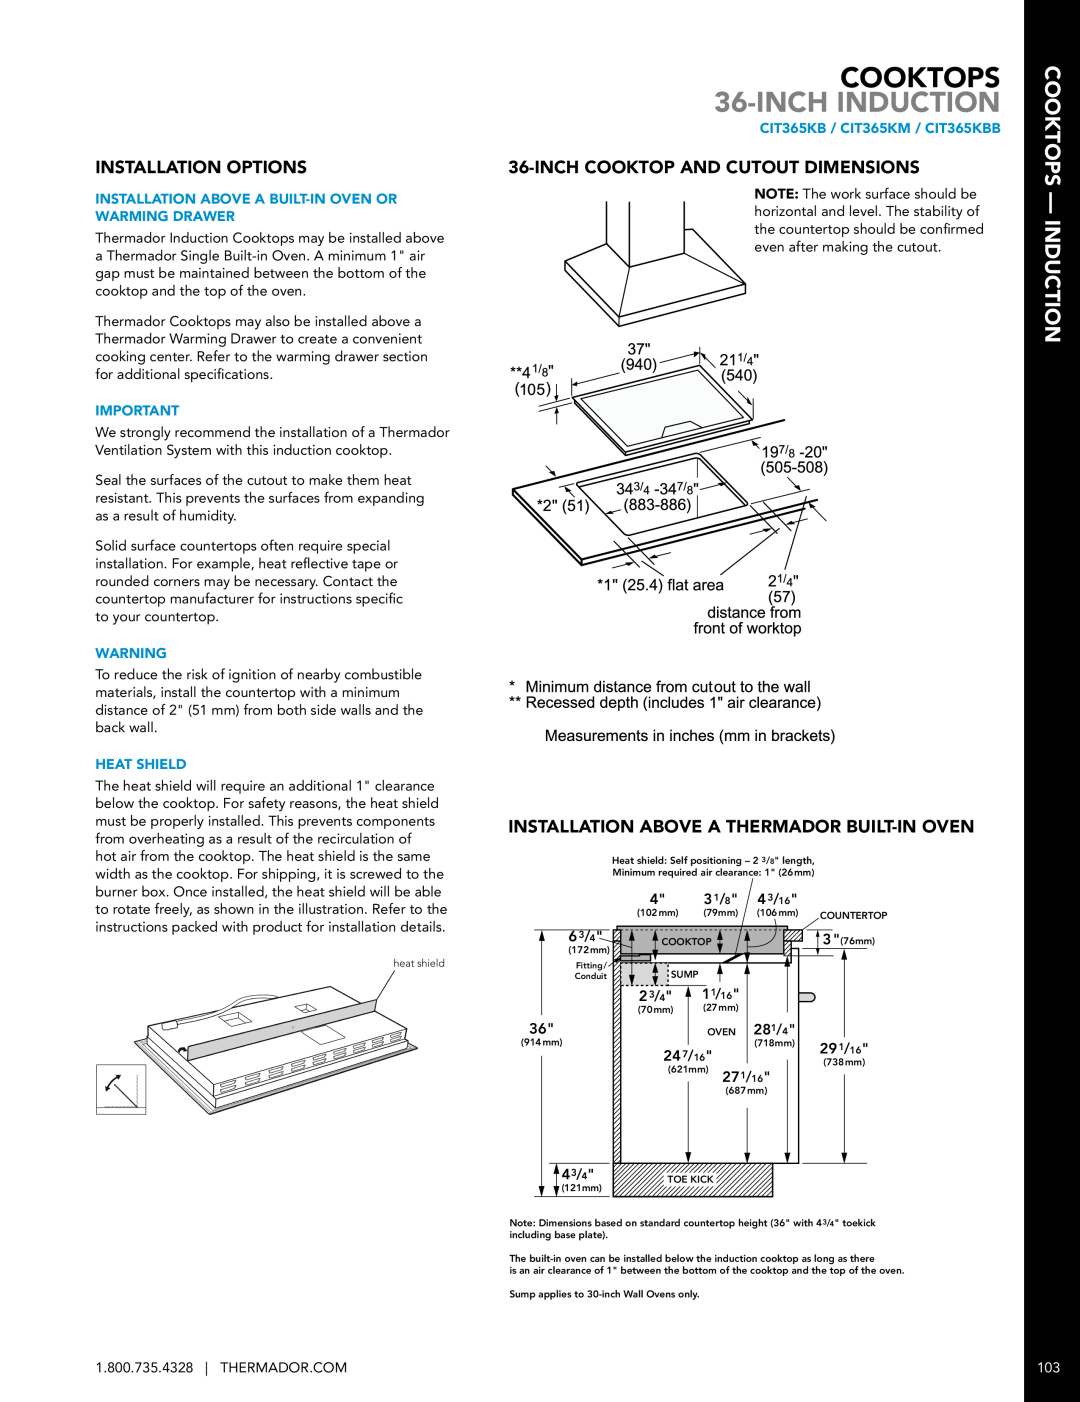 Thermador CIT36XKB manual COOKTOPS 36-INCHINDUCTION, Cooktops - Induction, Installation Options, Heat Shield 